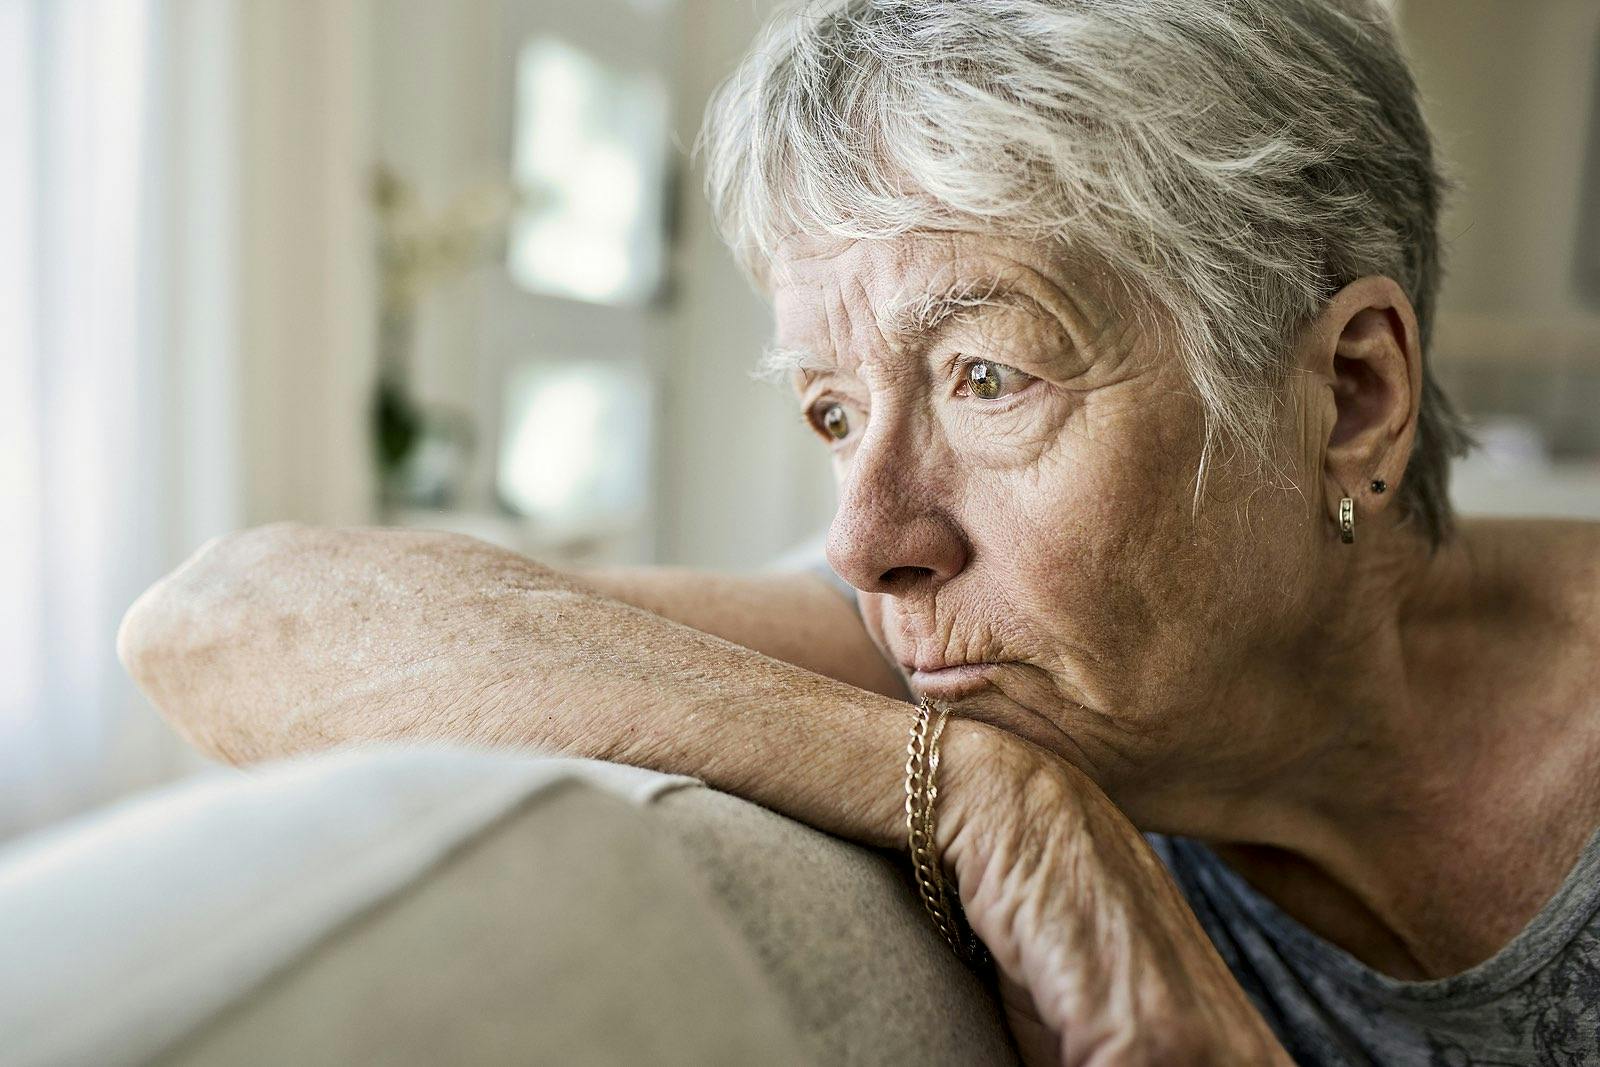 older woman looking pensive and depressed